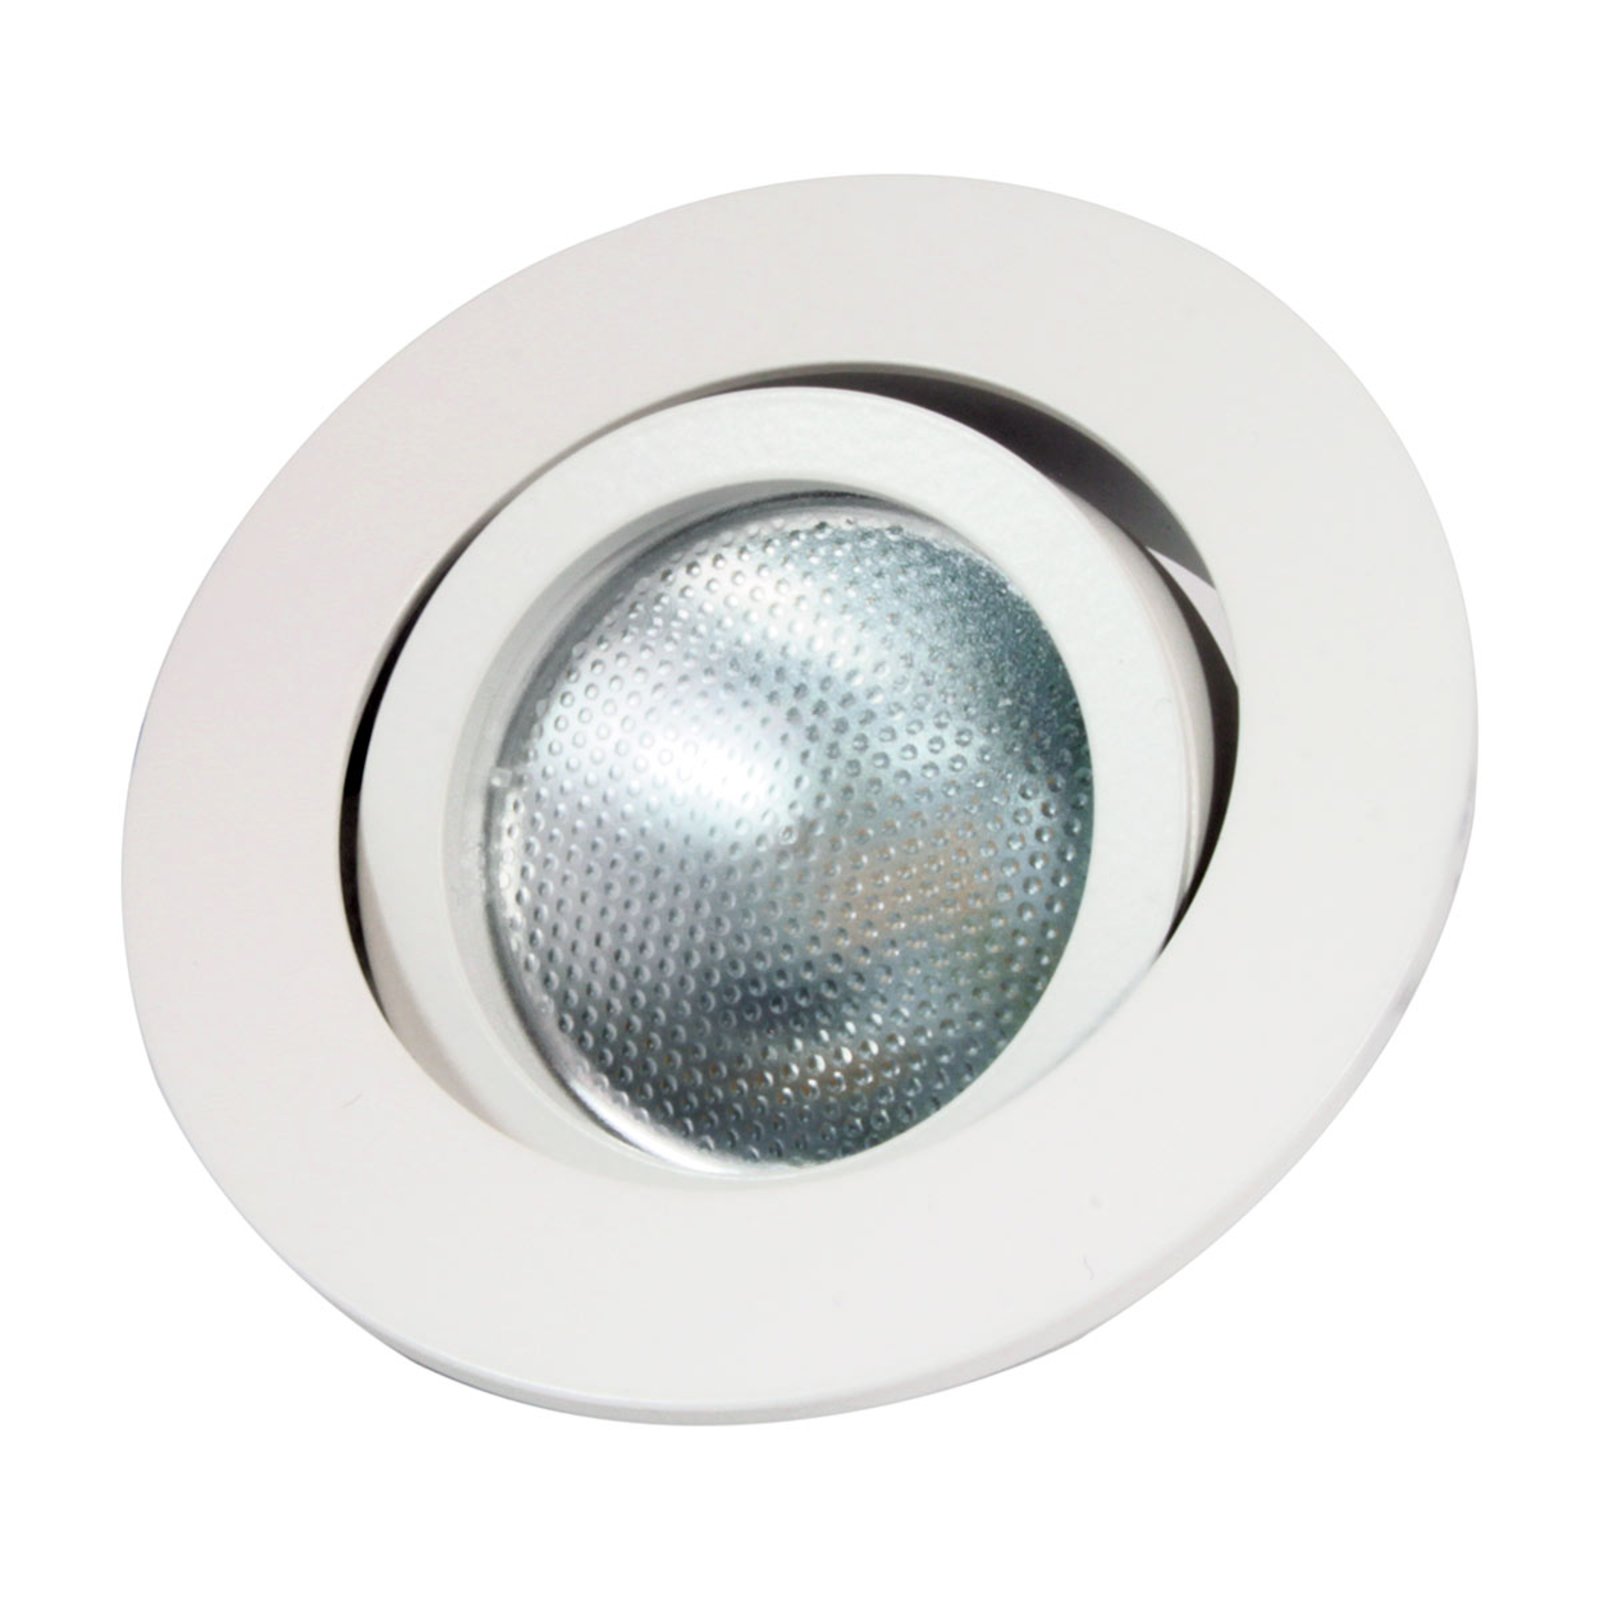 LED-Einbauring Decoclic GU10/GU5.3, rund, weiß